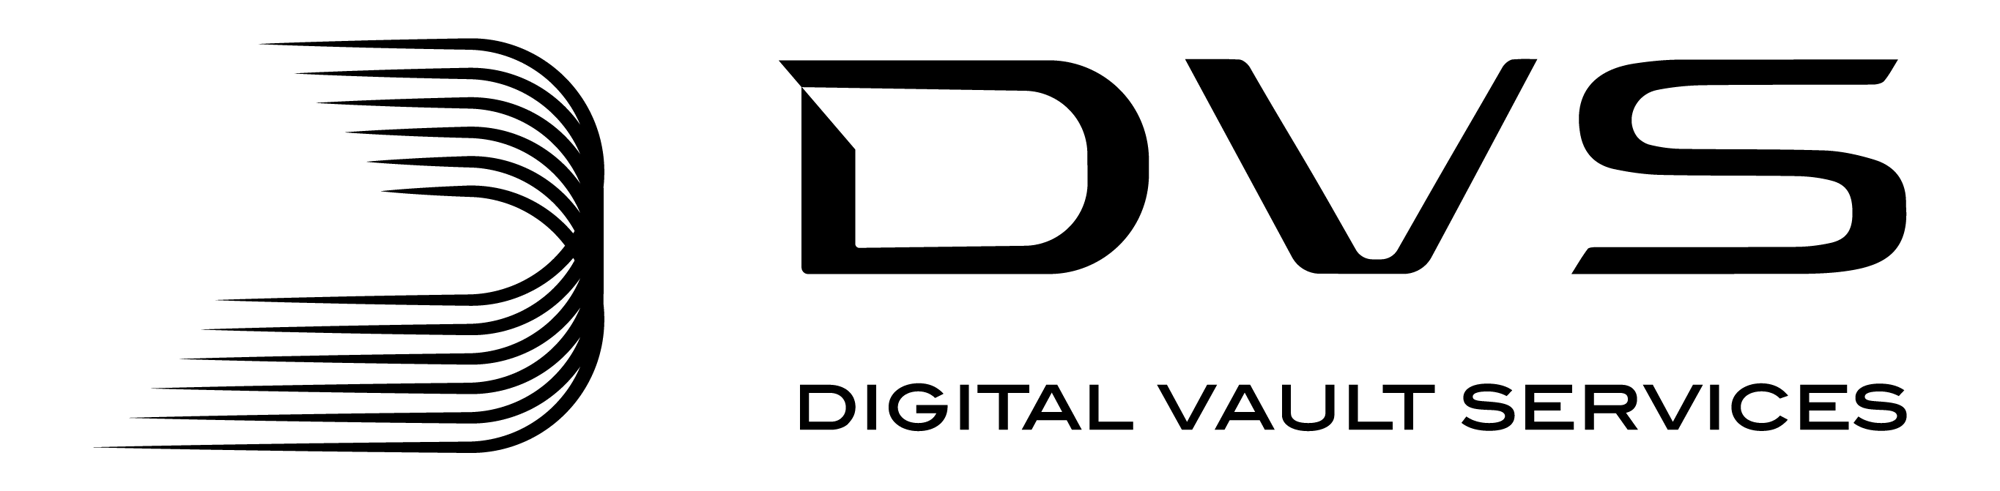 DVS Logo